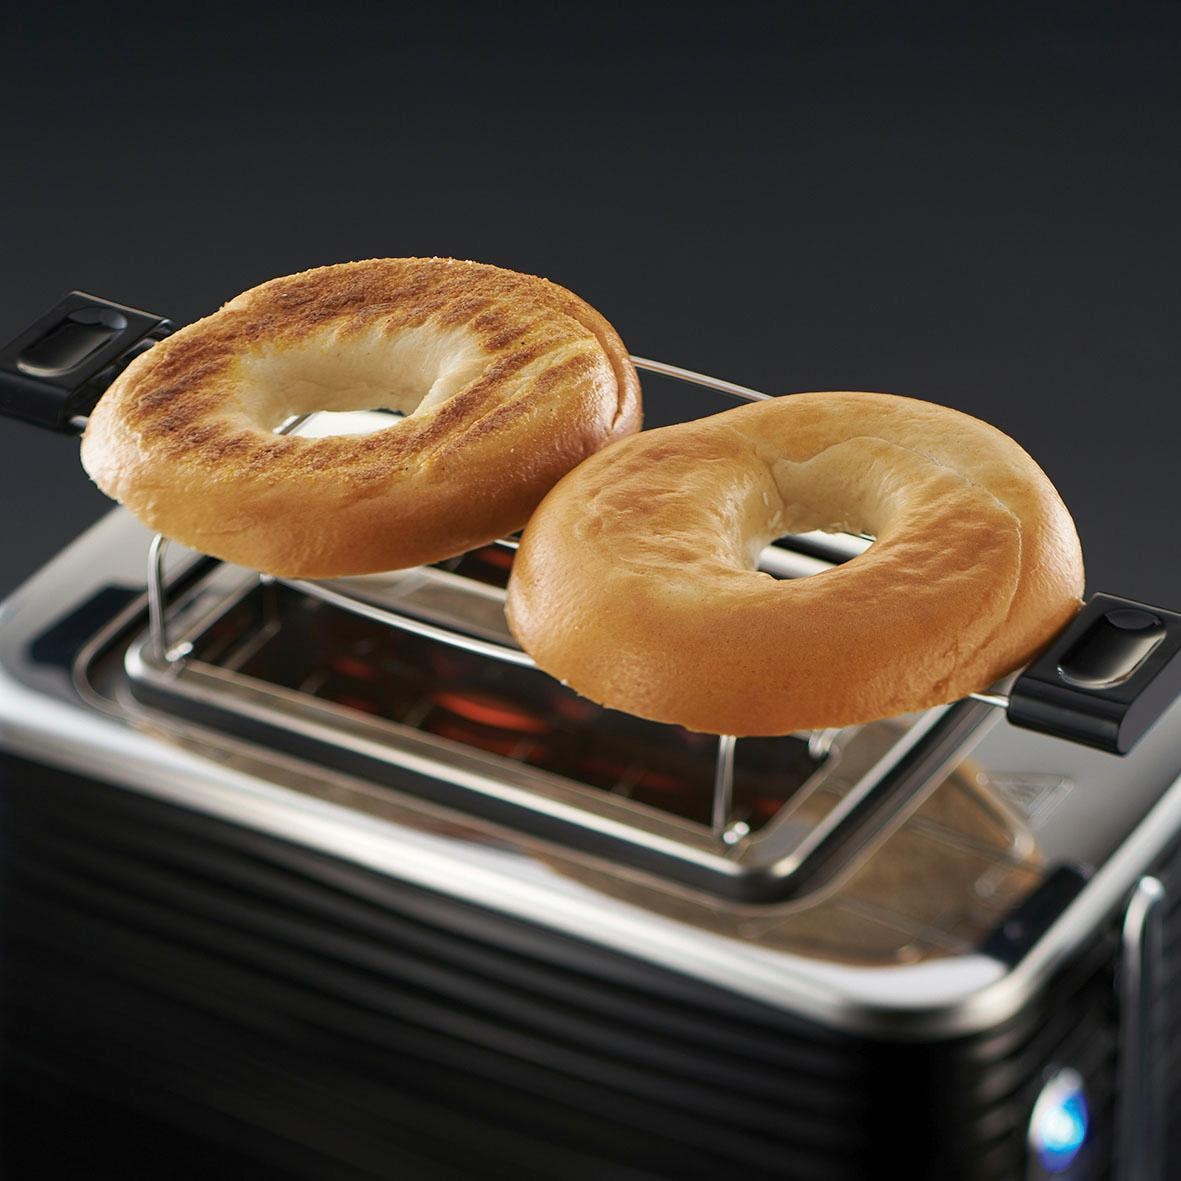 RUSSELL HOBBS Toaster »Inspire 24371-56«, 2 kurze Schlitze, 1050 W